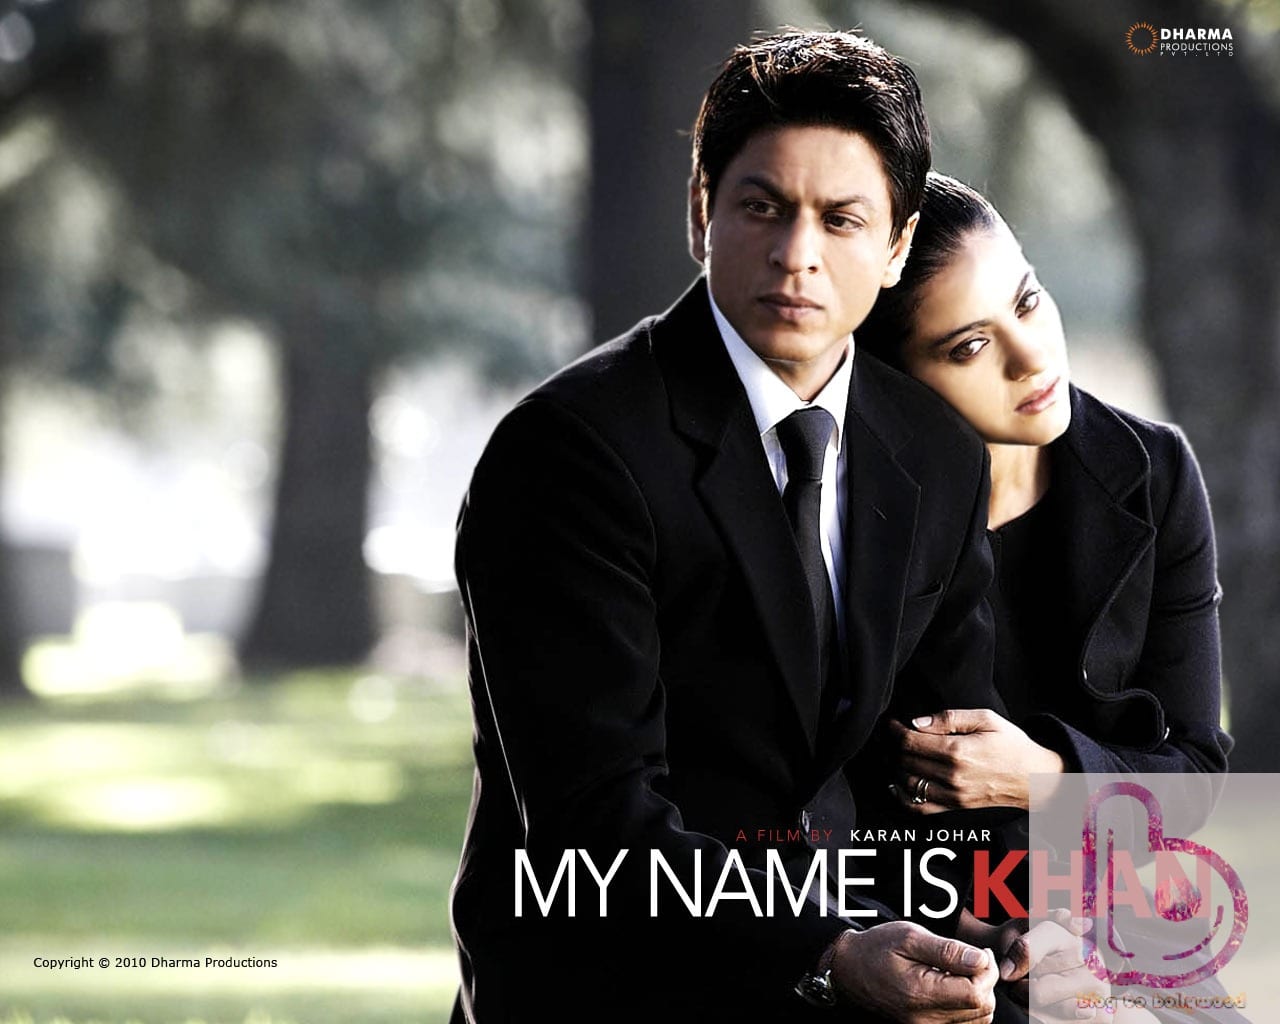 SRK's best performance till date - My Name is Khan